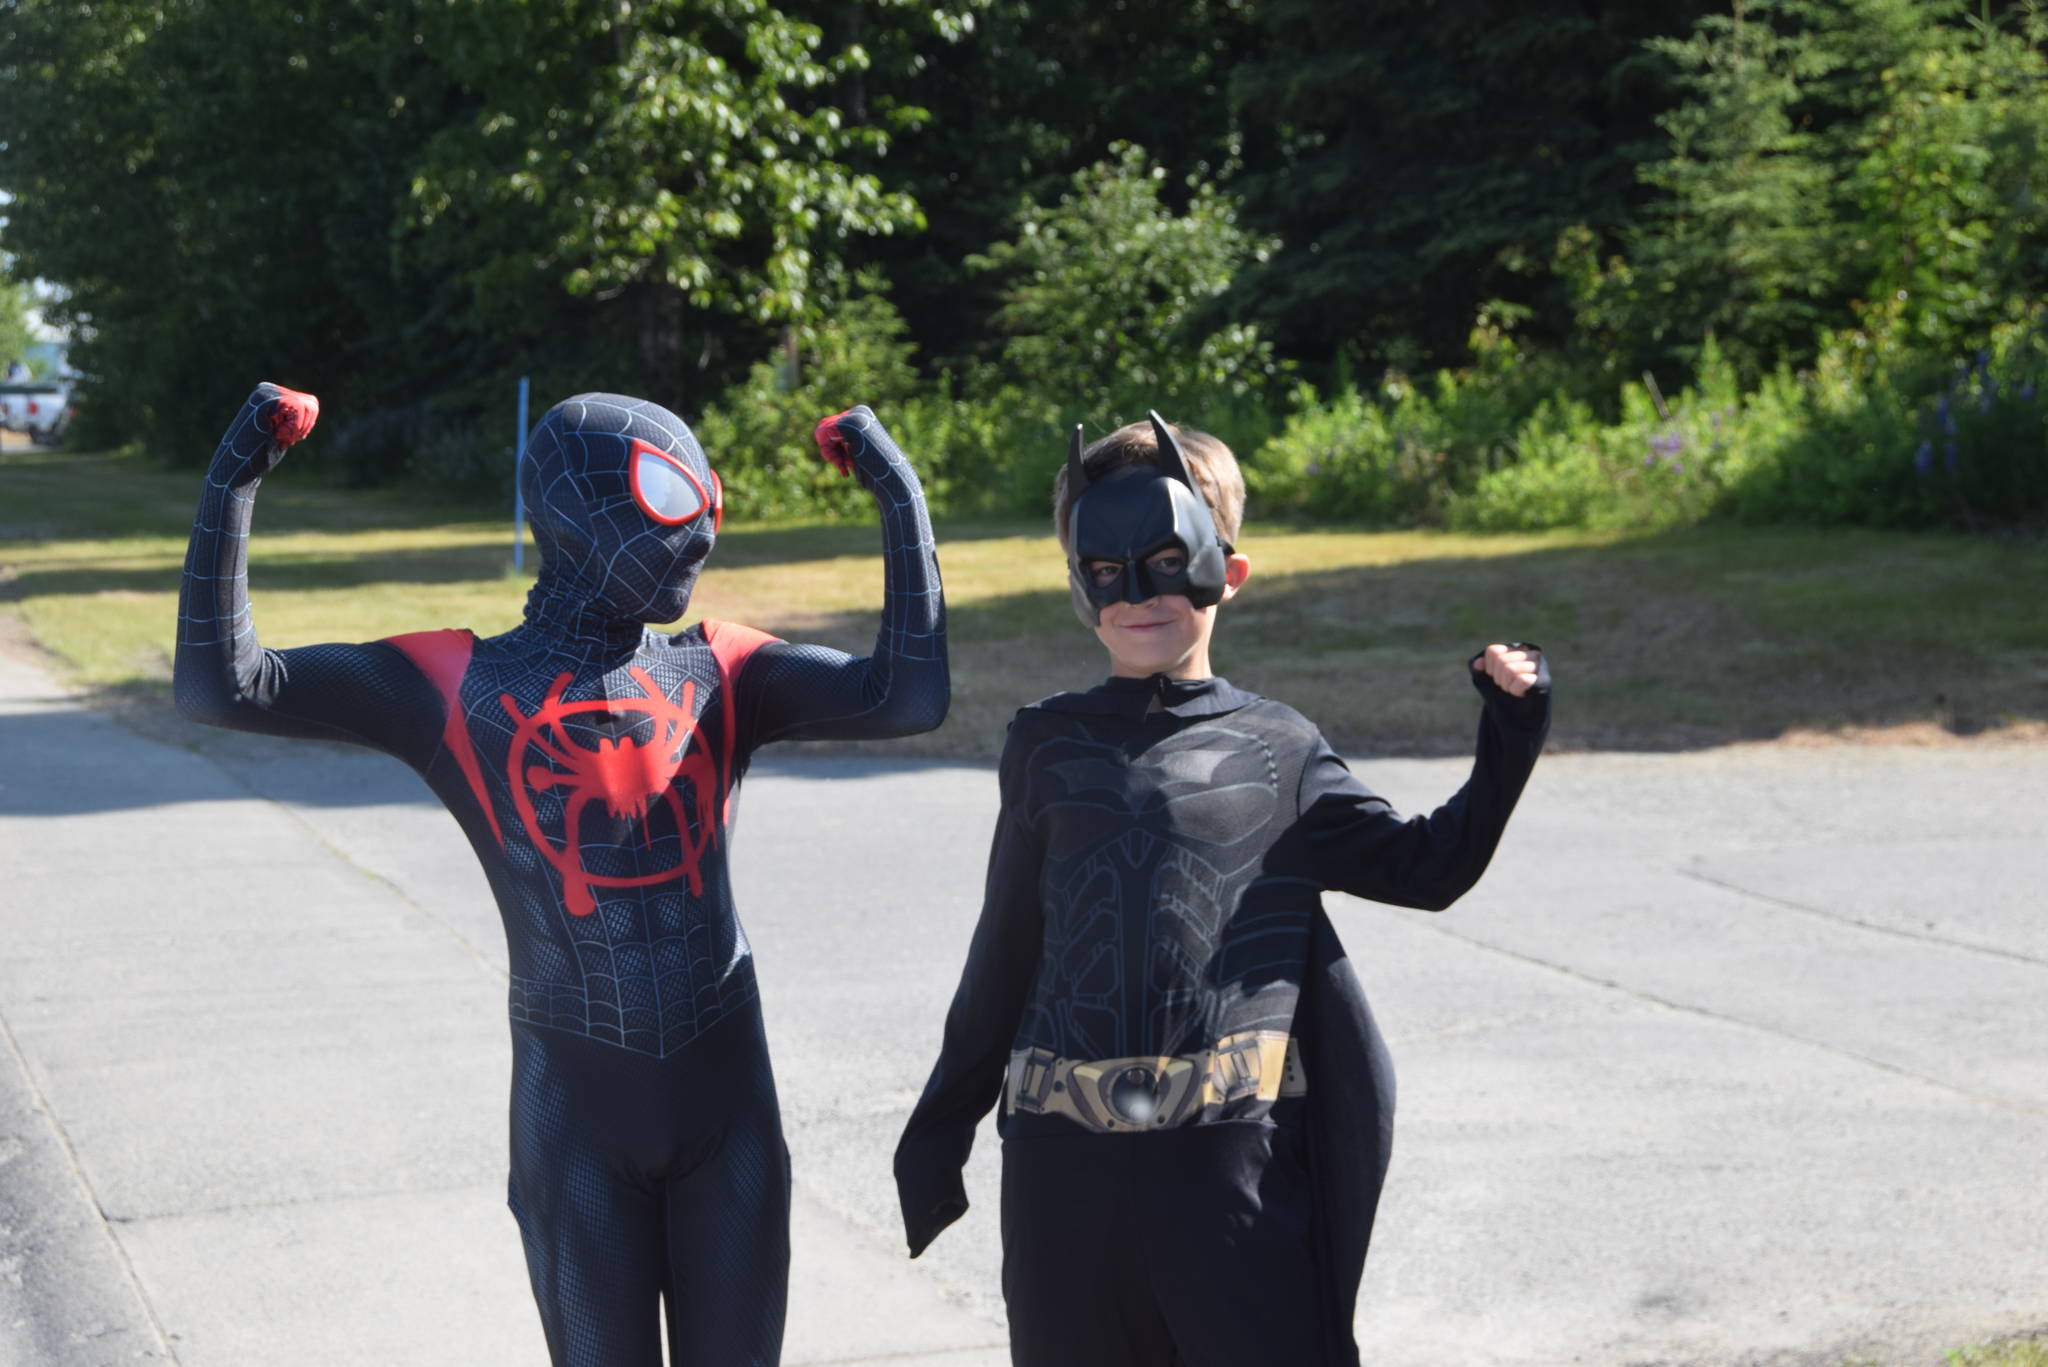 Spiderman and Batman flex their muscles during the July 4th parade in Kenai, Alaska. (Photo by Brian Mazurek/Peninsula Clarion)